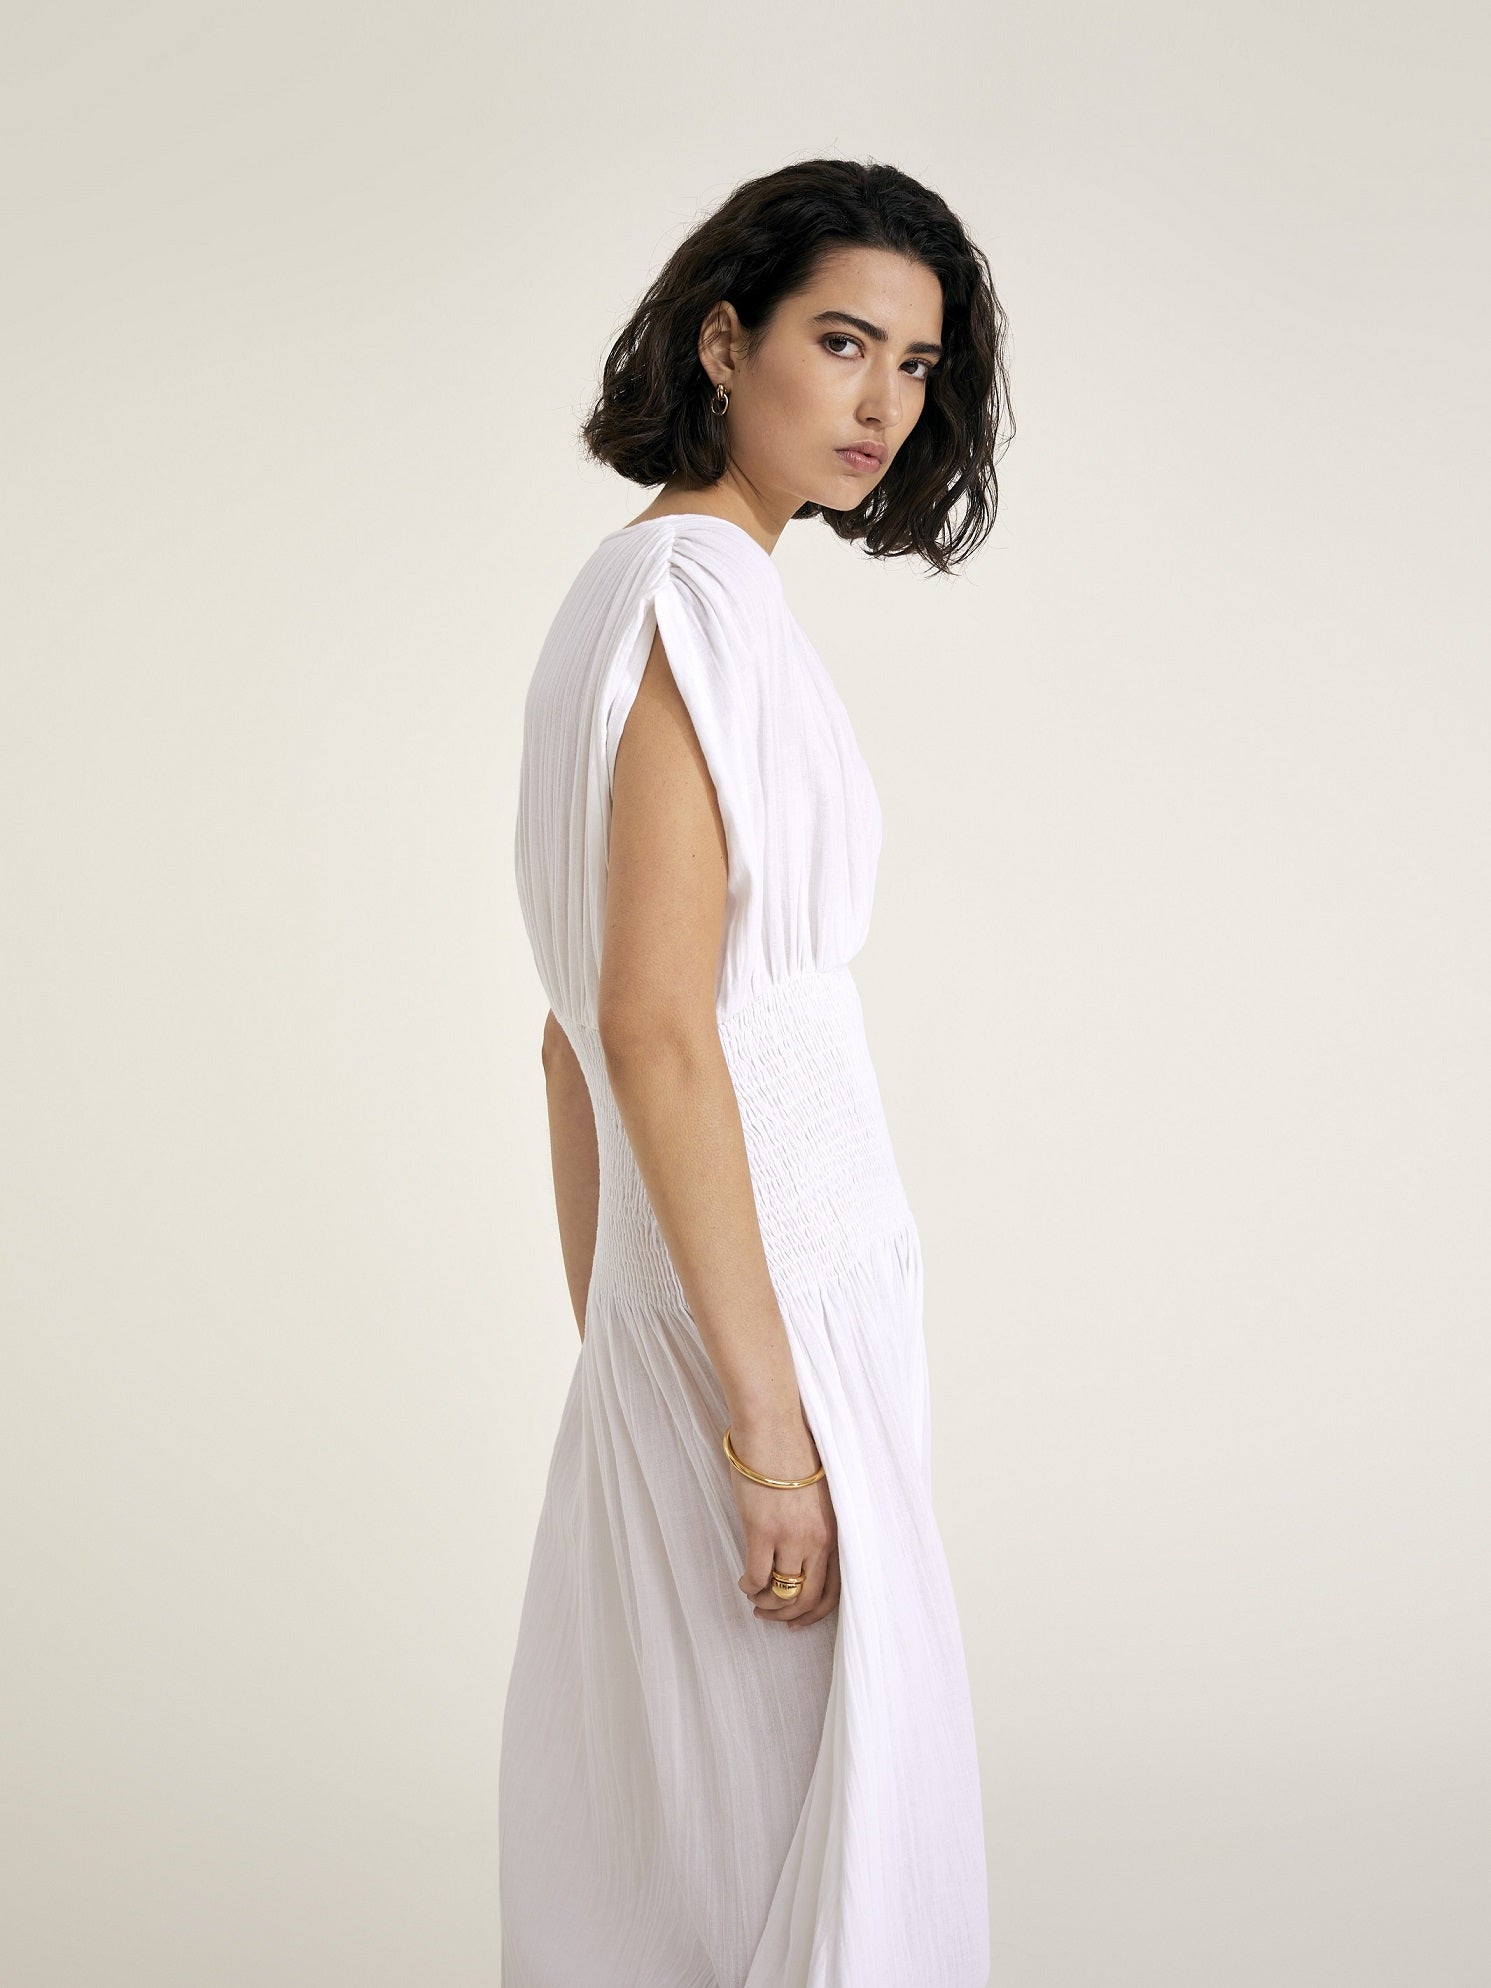 PENELOPE - White Cotton Dress - Mondo Corsini